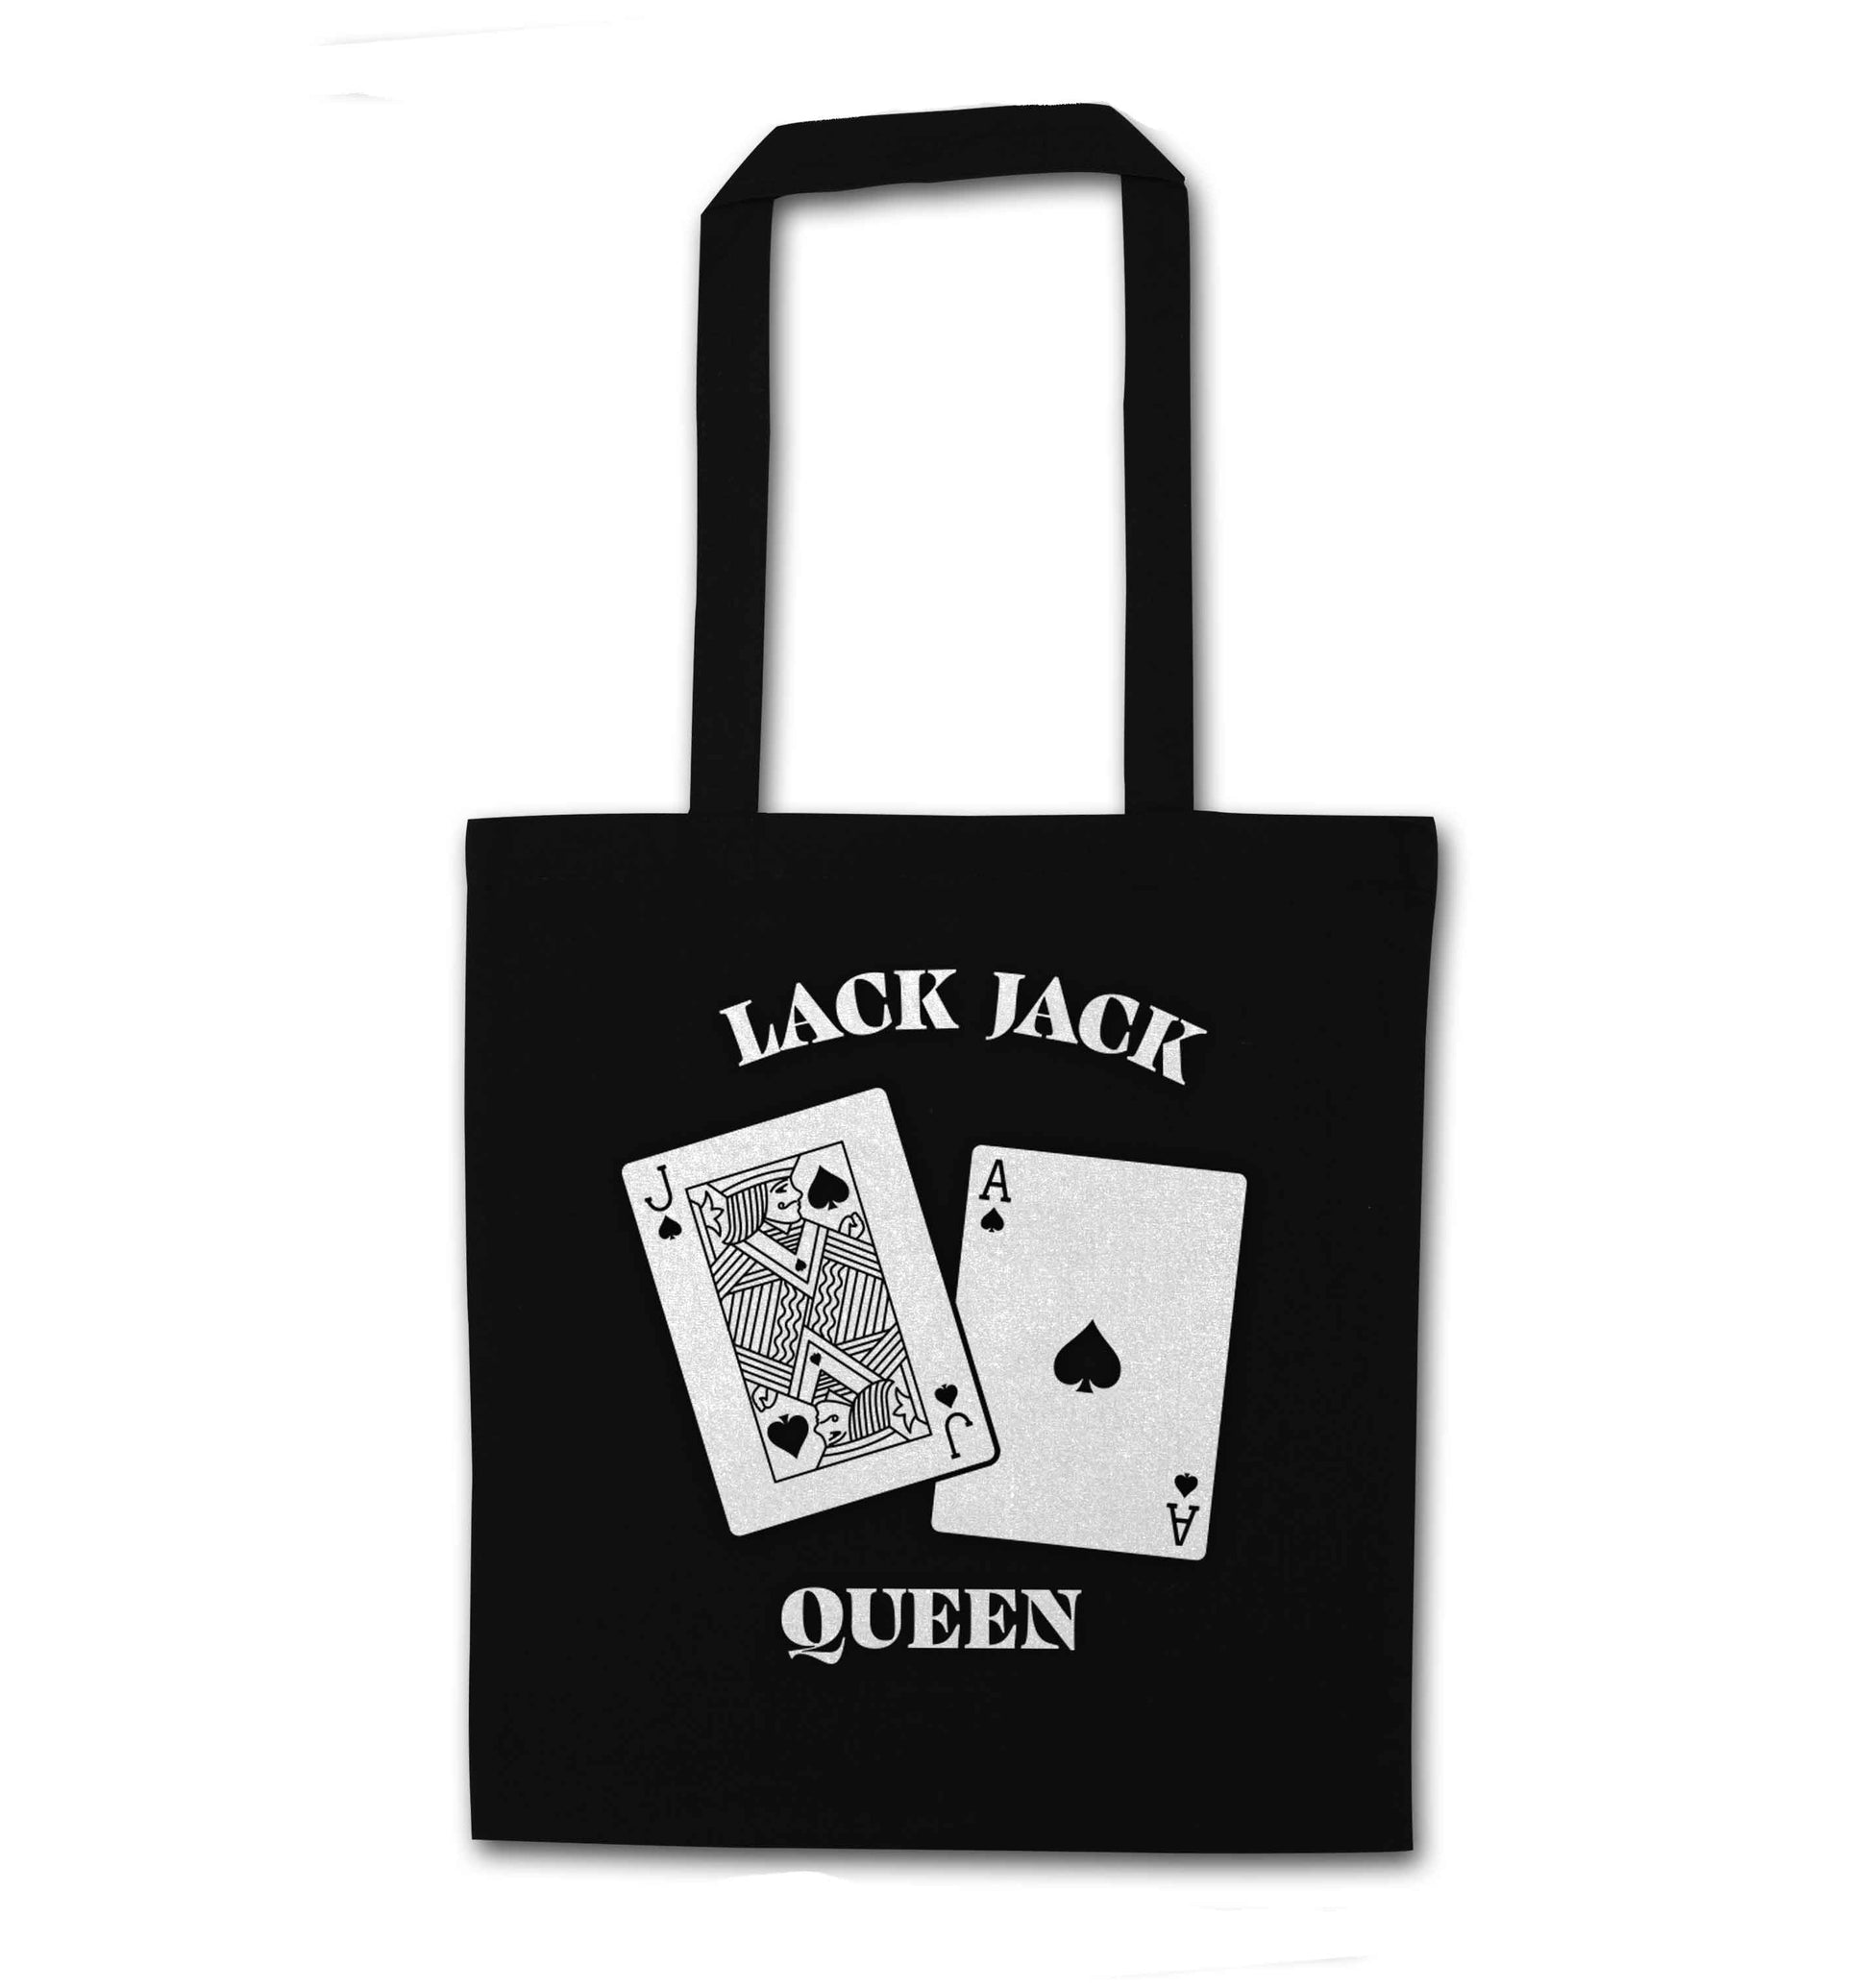 Blackjack queen black tote bag